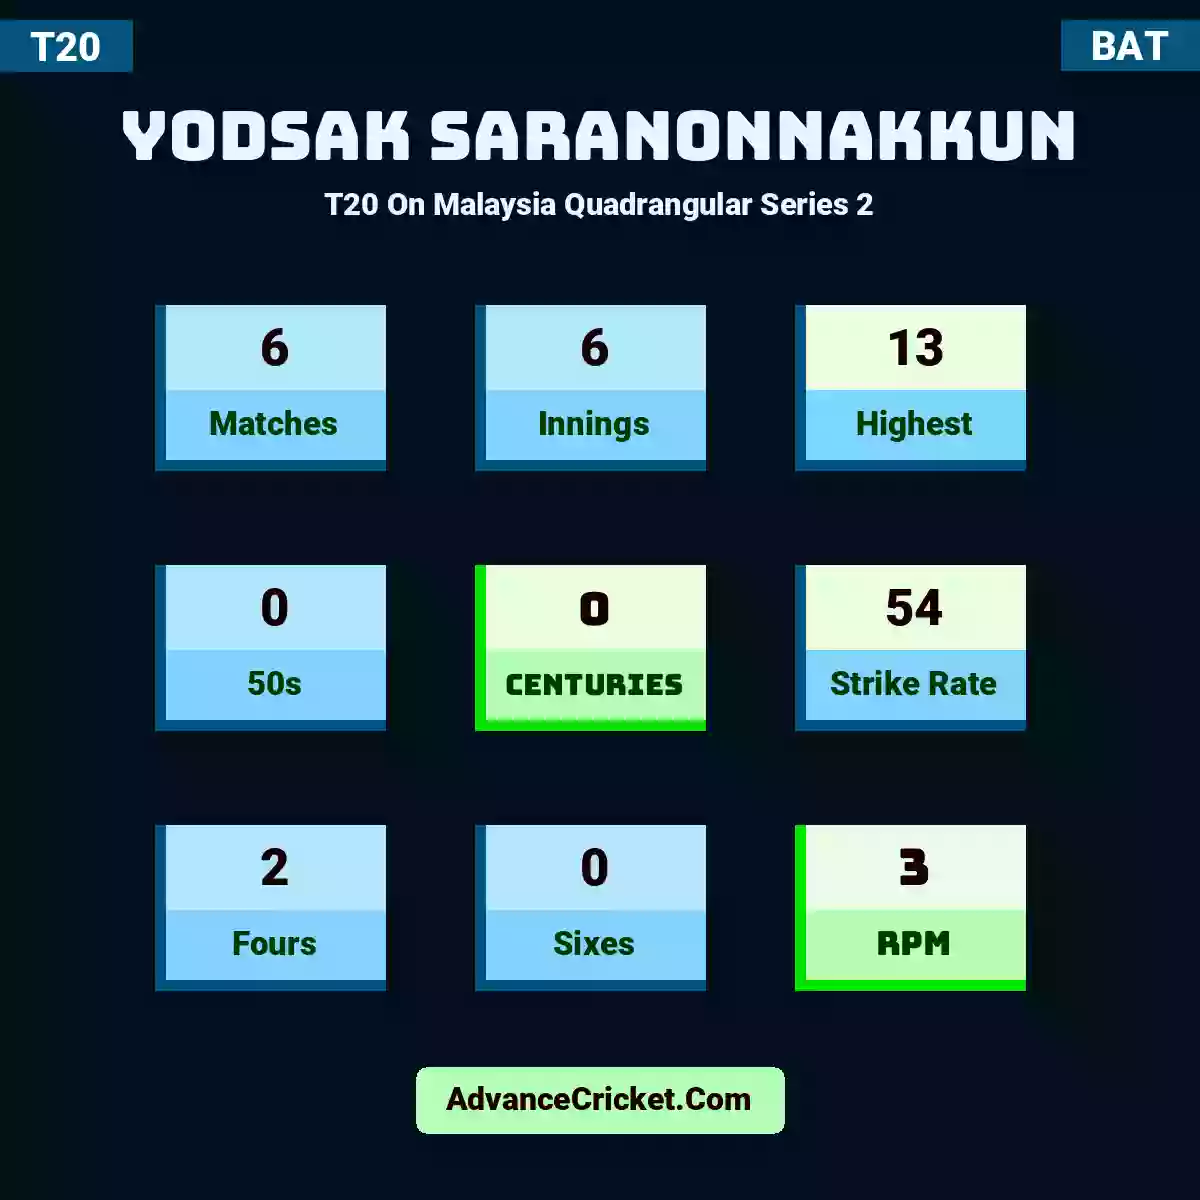 Yodsak Saranonnakkun T20  On Malaysia Quadrangular Series 2, Yodsak Saranonnakkun played 6 matches, scored 13 runs as highest, 0 half-centuries, and 0 centuries, with a strike rate of 54. Y.Saranonnakkun hit 2 fours and 0 sixes, with an RPM of 3.